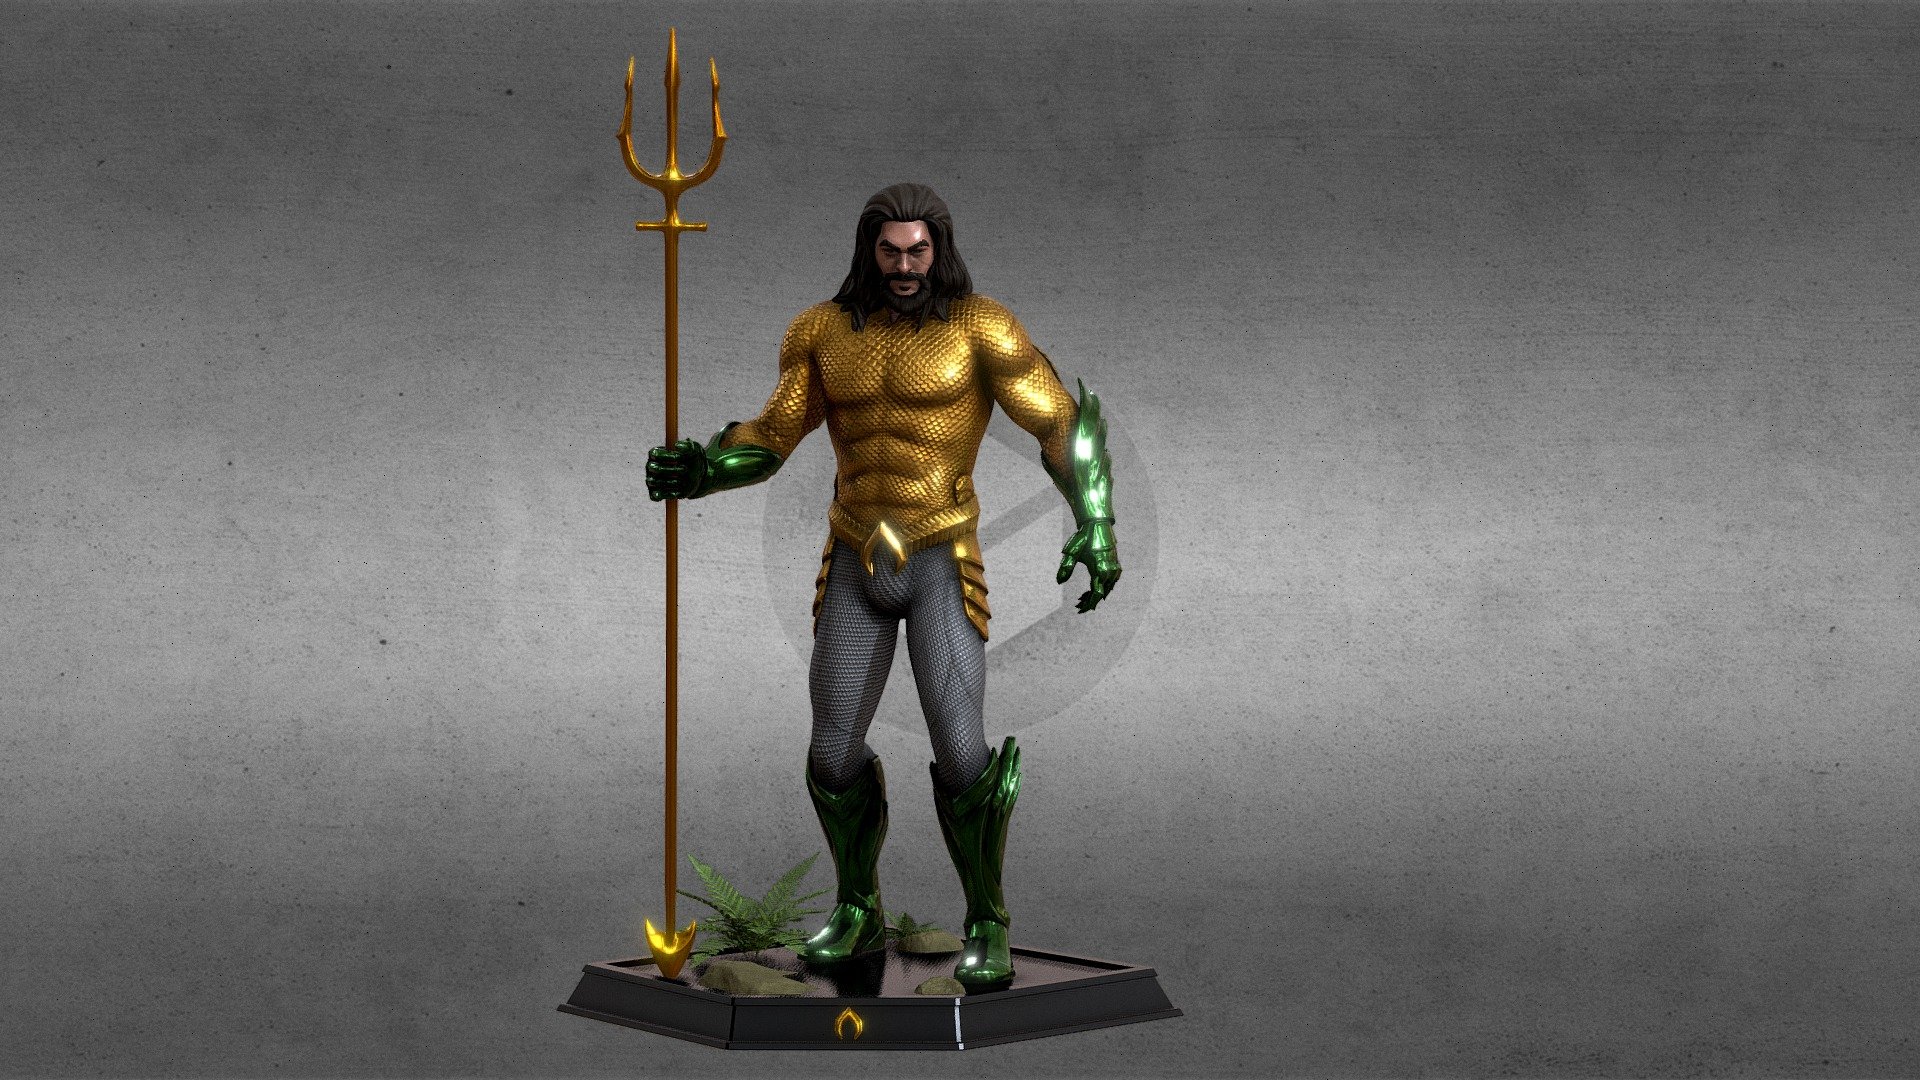 Aquaman 3d model
Rigged file here https://rb.gy/pz9j6 - Aquaman Rigged - Buy Royalty Free 3D model by 5 Dollar Store (@gatdesigner) 3d model